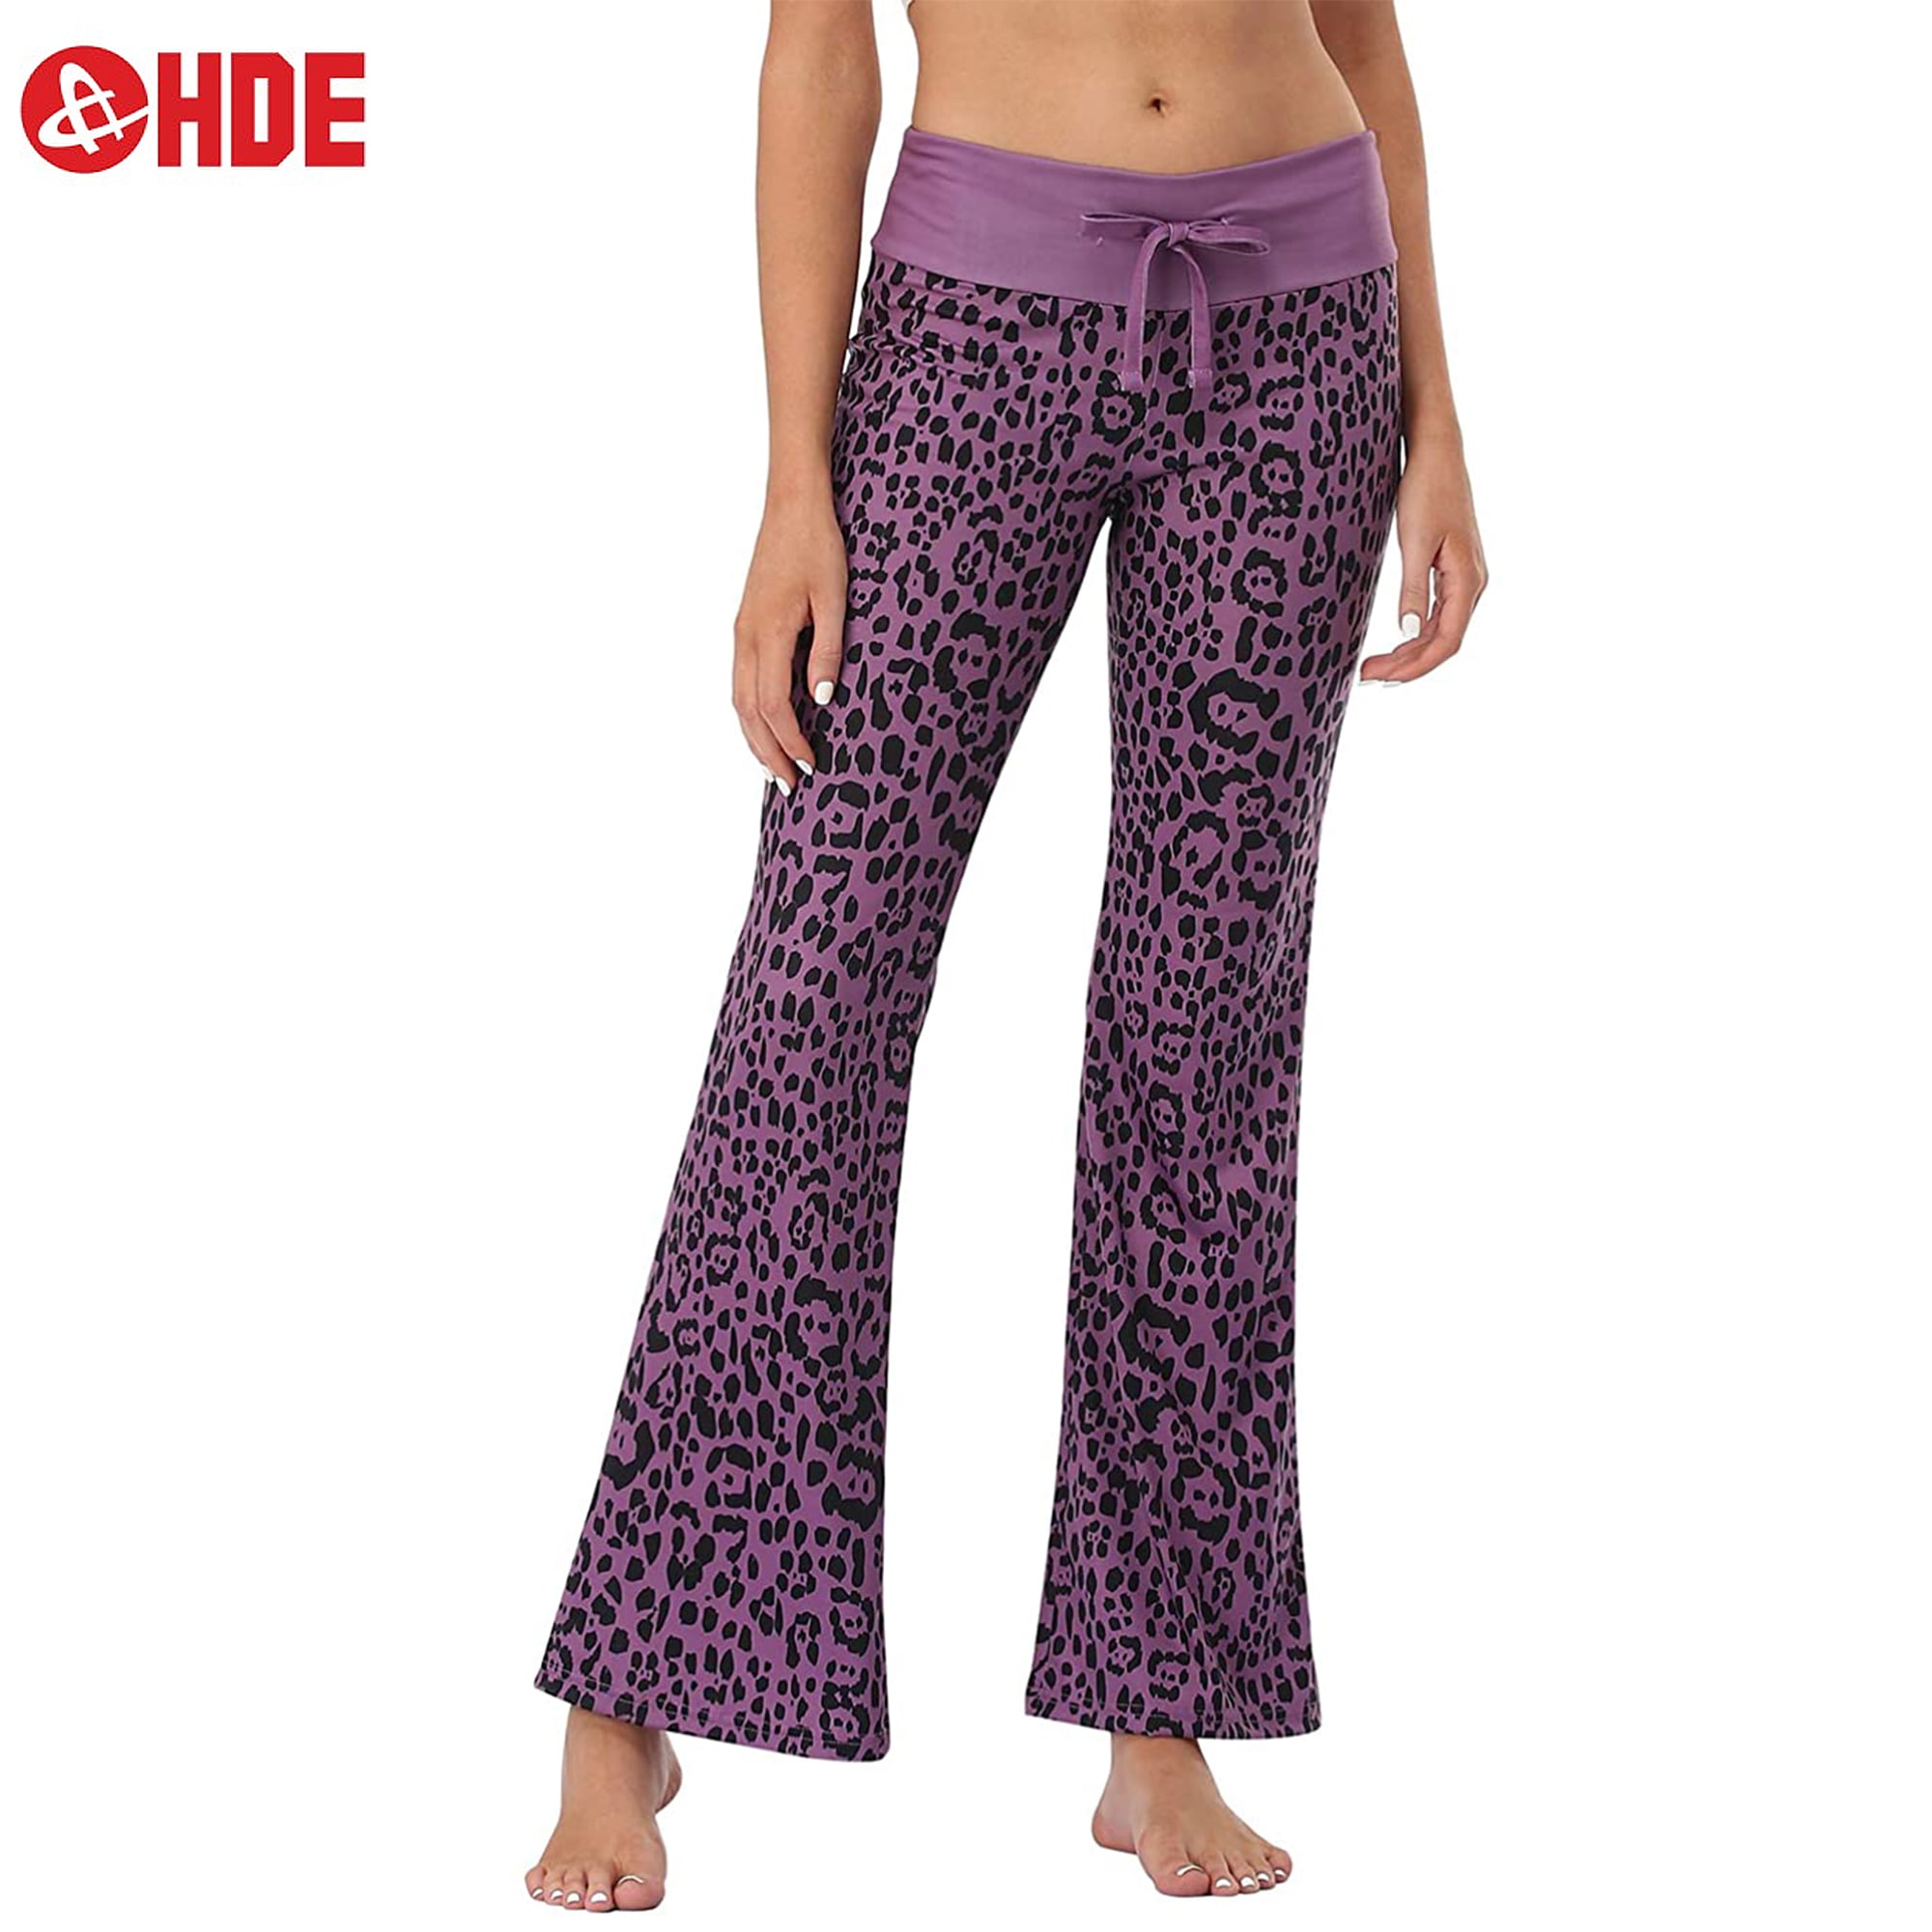 Retro Floral Lace Bra Top & Flared Lounge Pants Nightwear Leg Avenue Pyjamas 